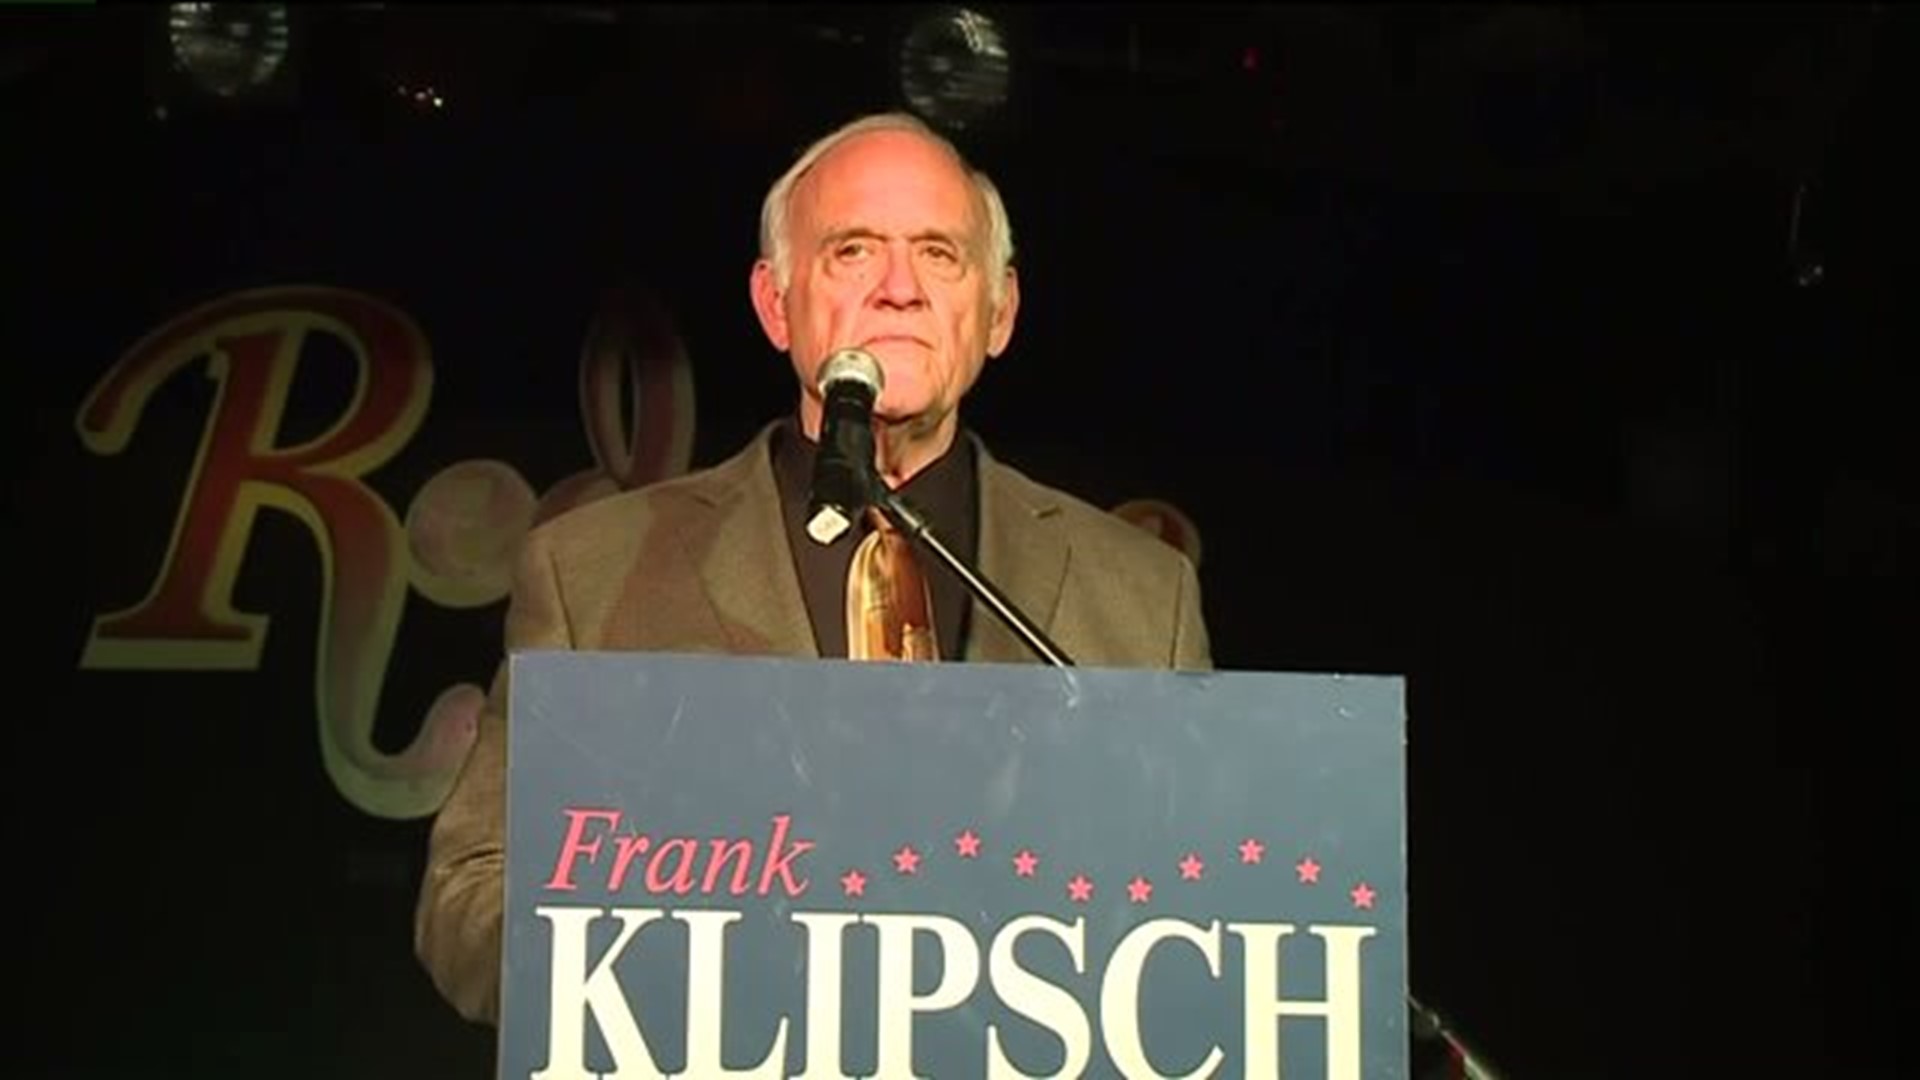 Frank Klipsch accepts Davenport mayoral seat